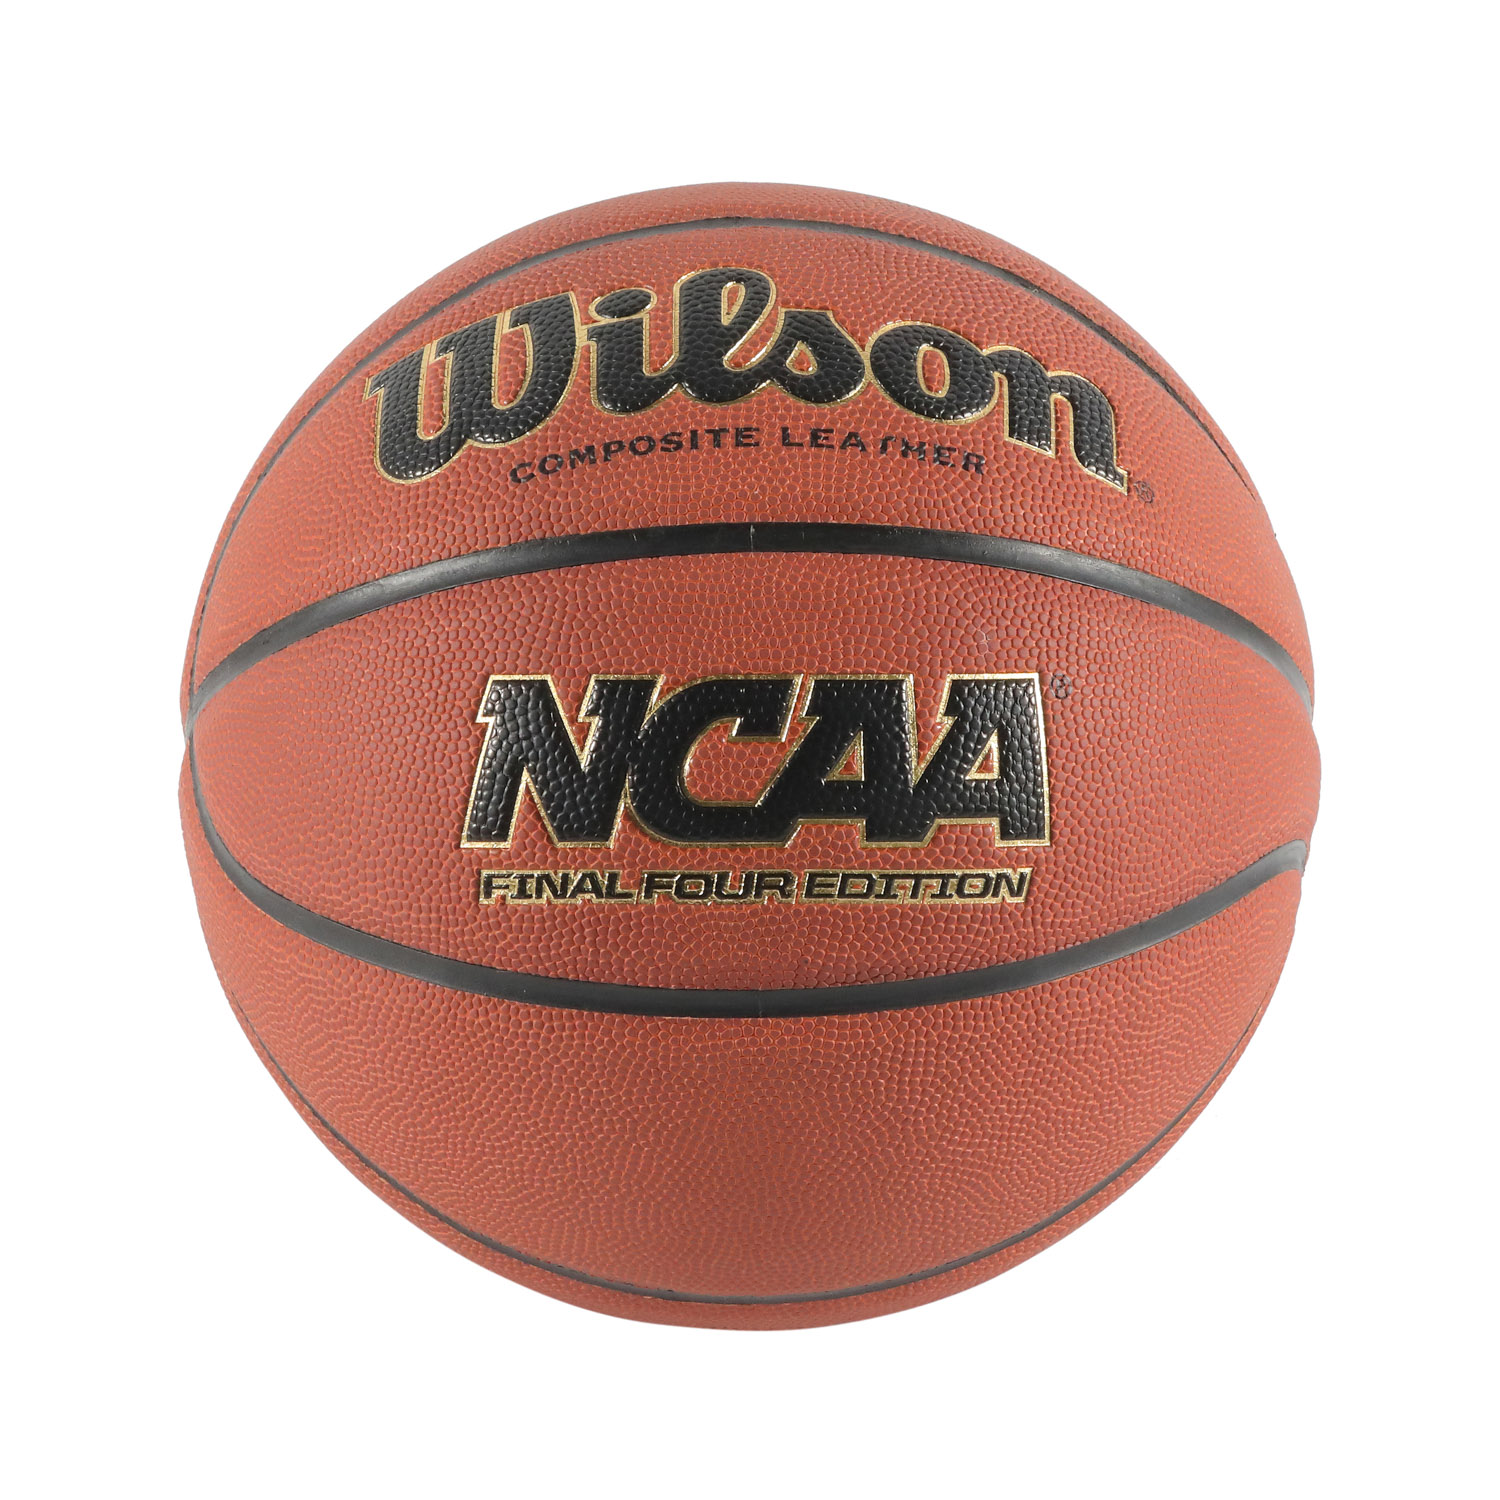 Customize Your Own Logo Basketball Ball High Quality Microfiber Basketball